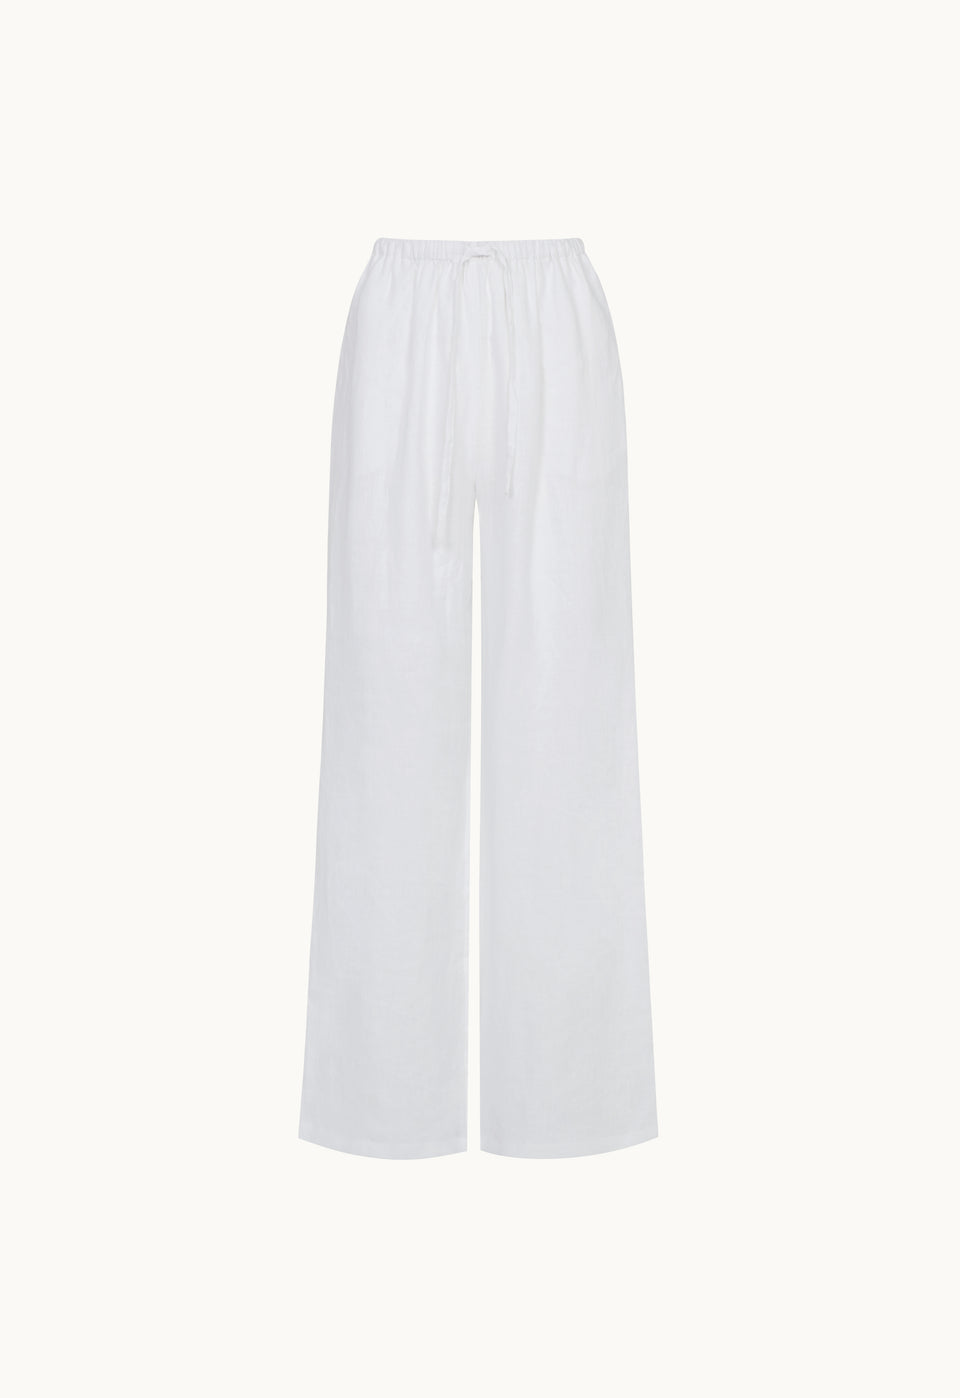 Linen Drawstring Pant in White